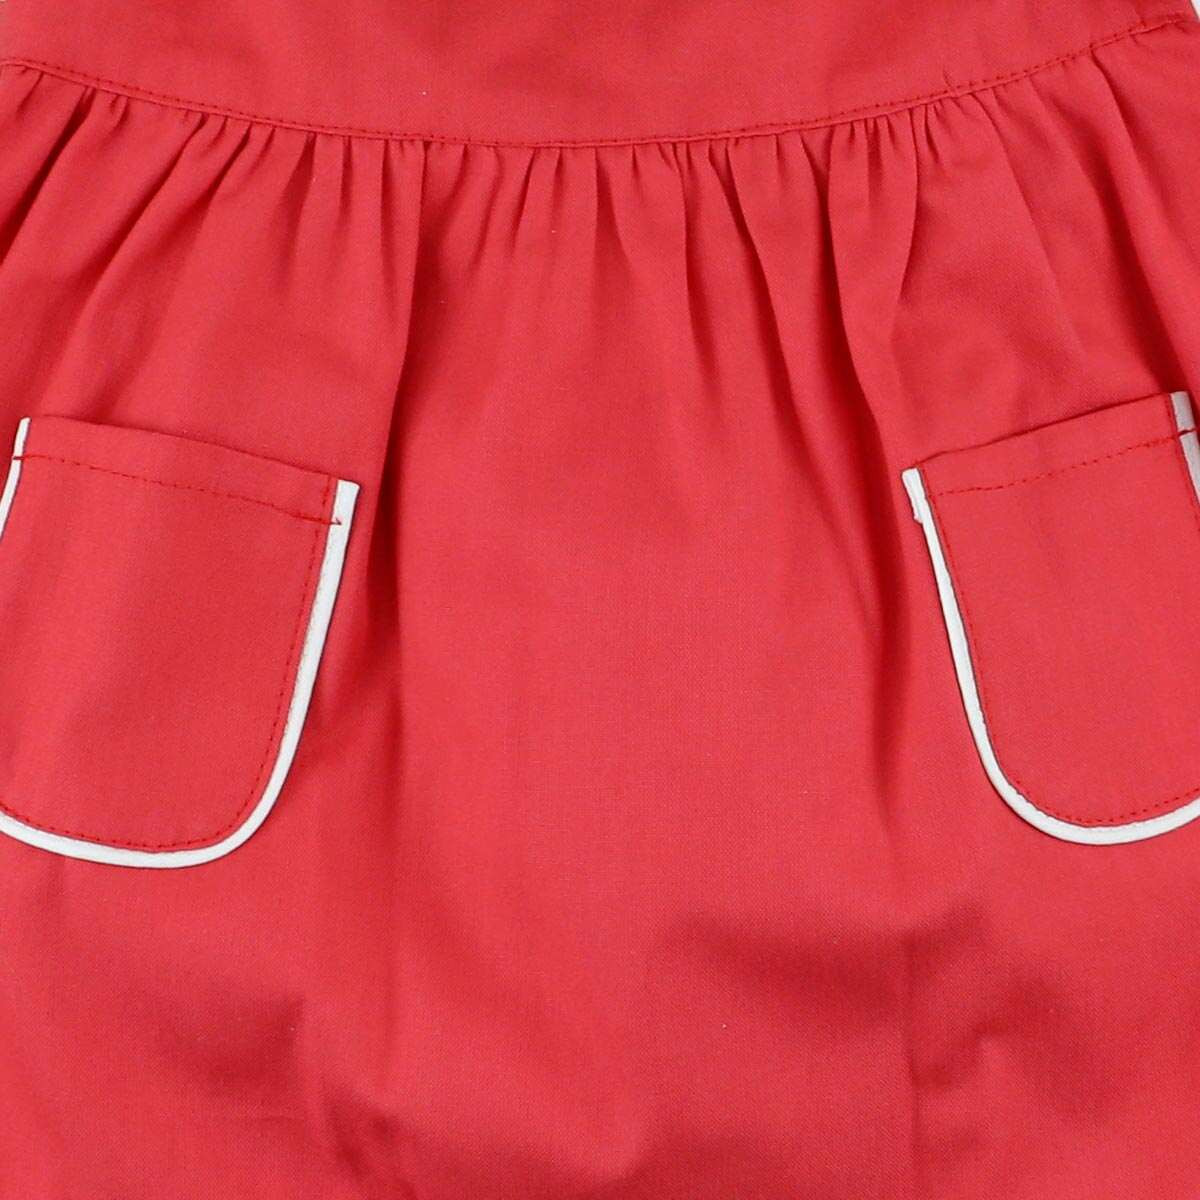 RED DRESS BABYFERR - 2